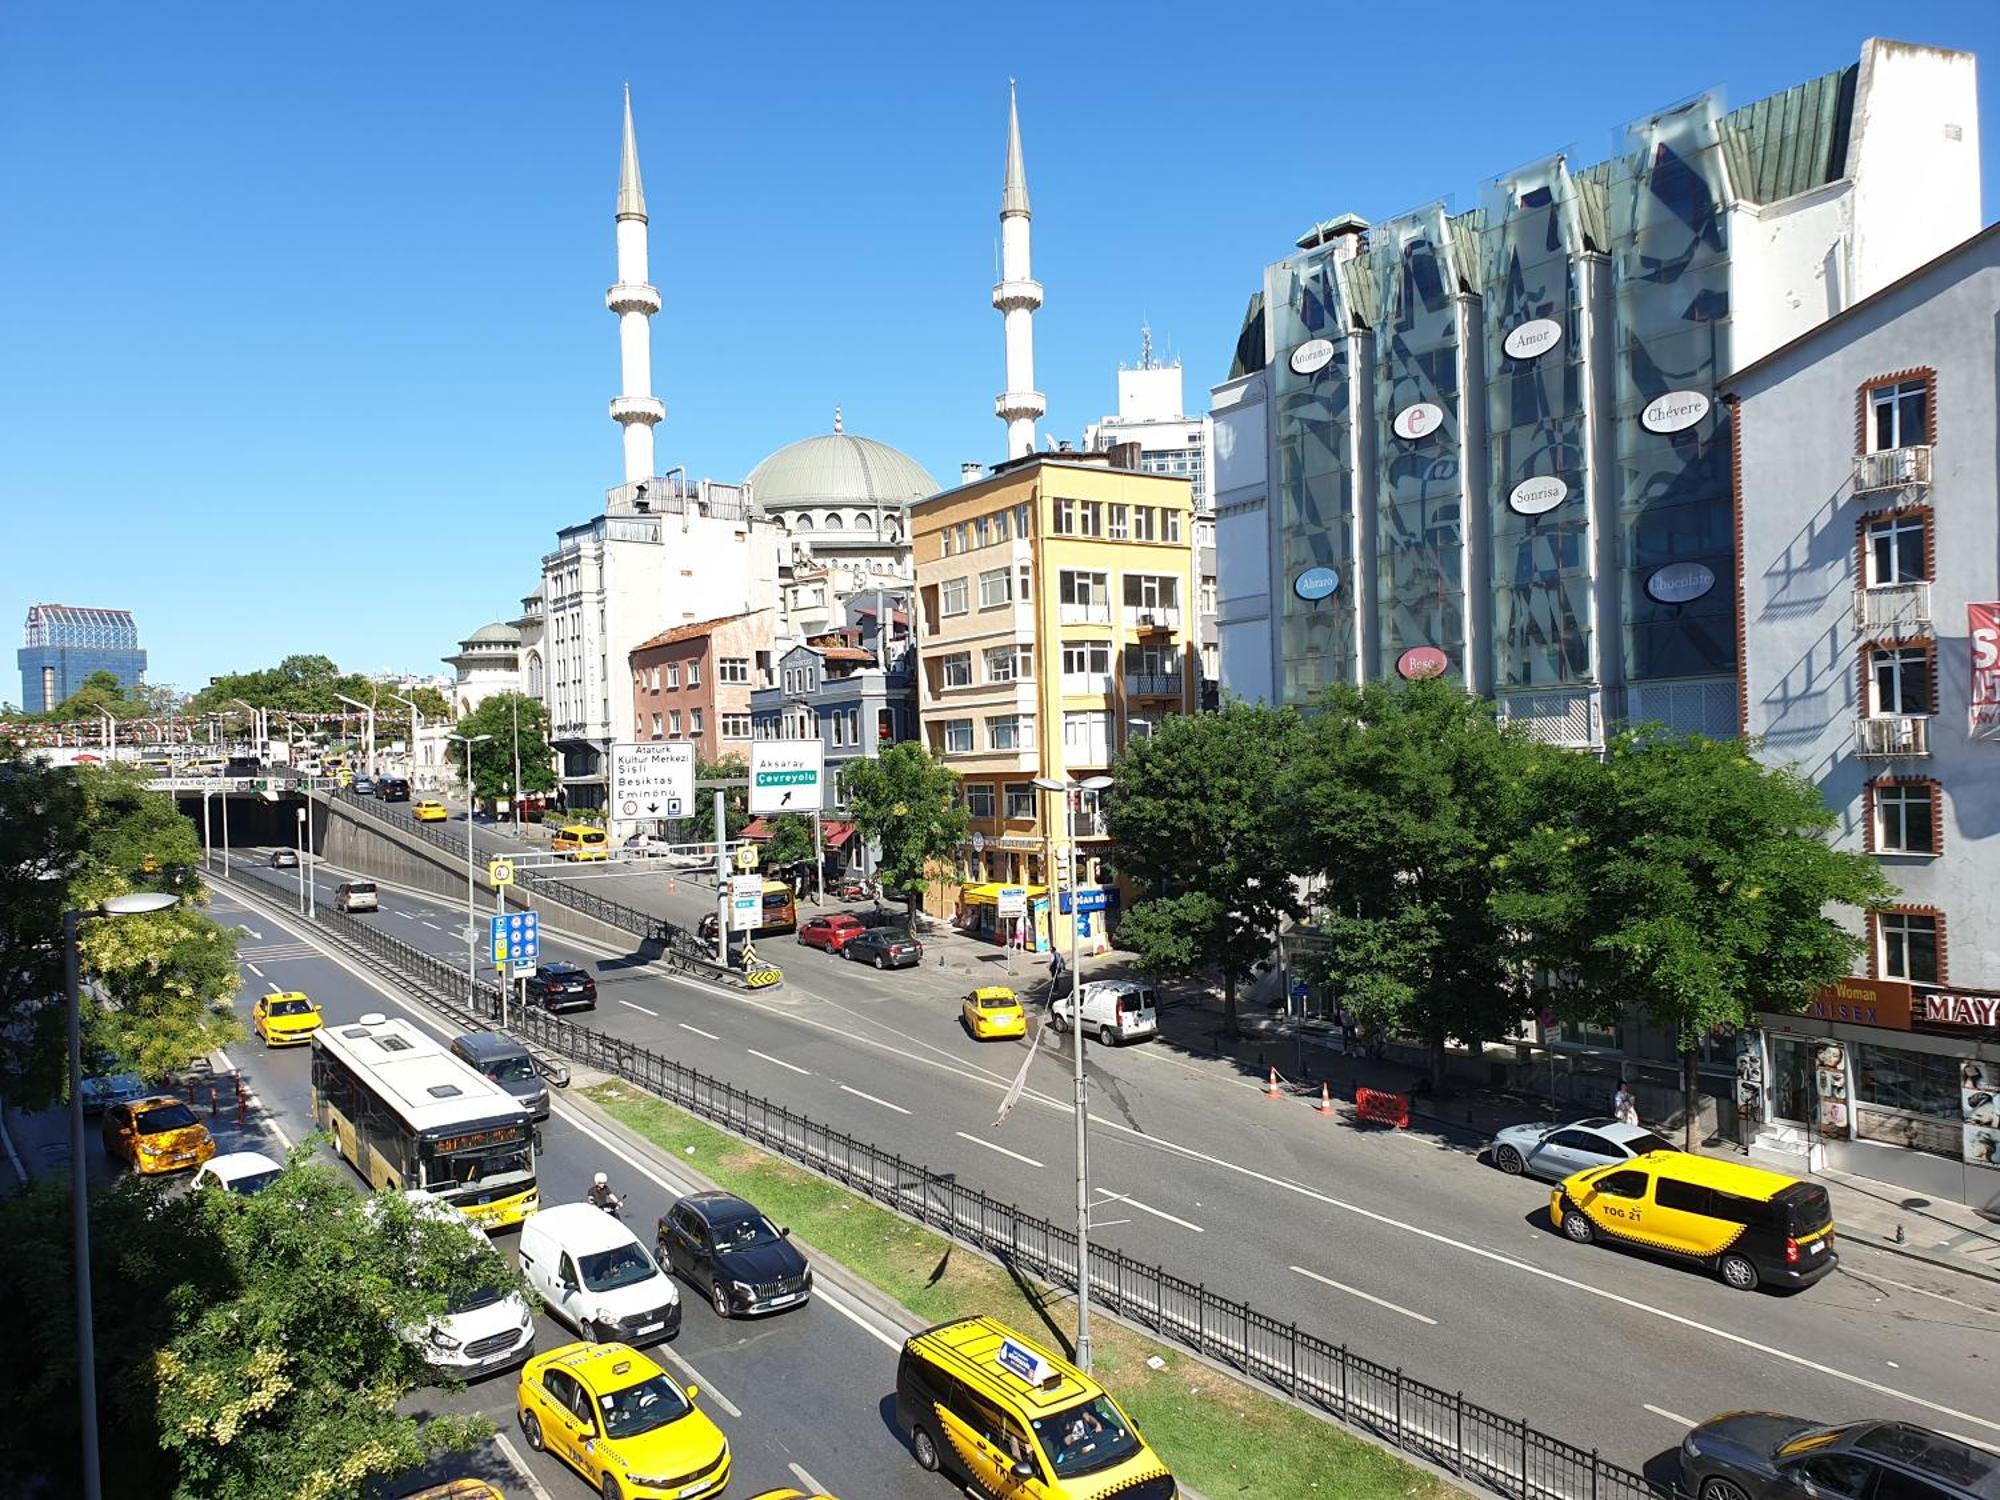 Seven Suite Taksim Istanbul Exterior foto